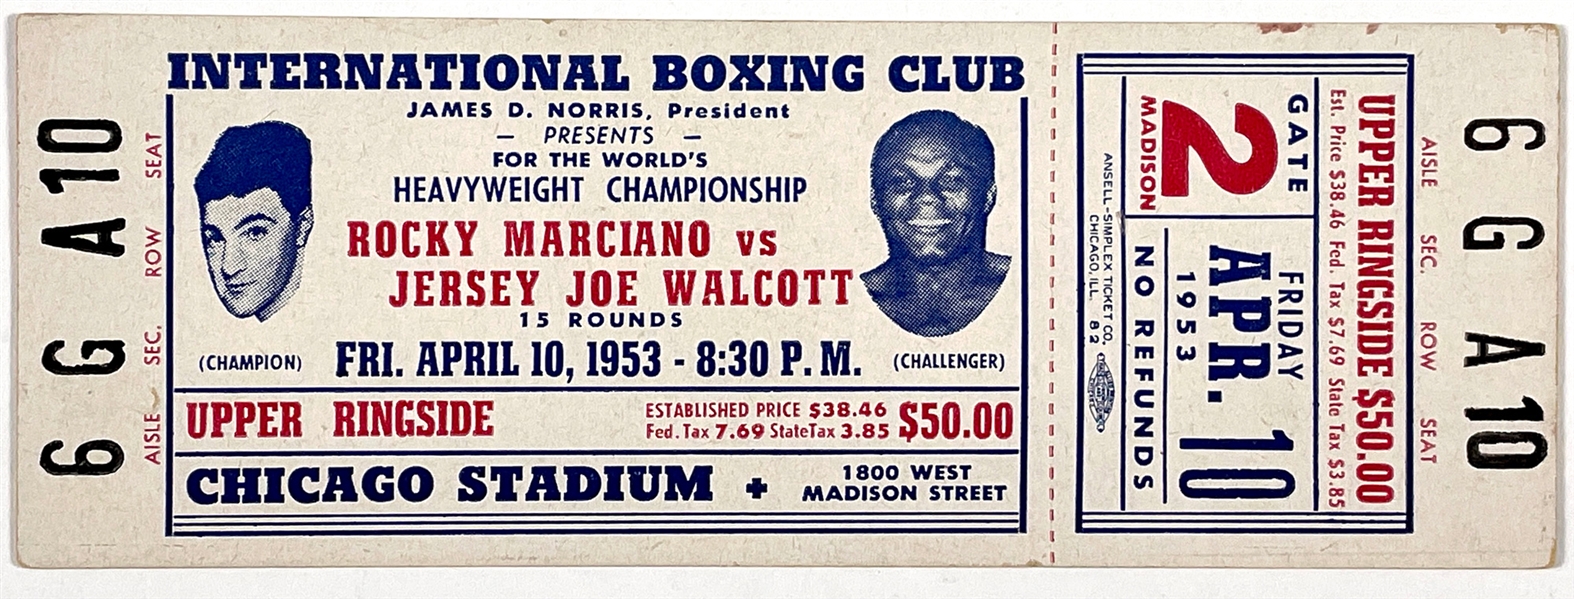 April 10, 1953, FULL Ticket for Rocky Marciano vs. Jersey Joe Walcott Second Fight - Plus Original Negative of 1952 Pre-Fight Photo